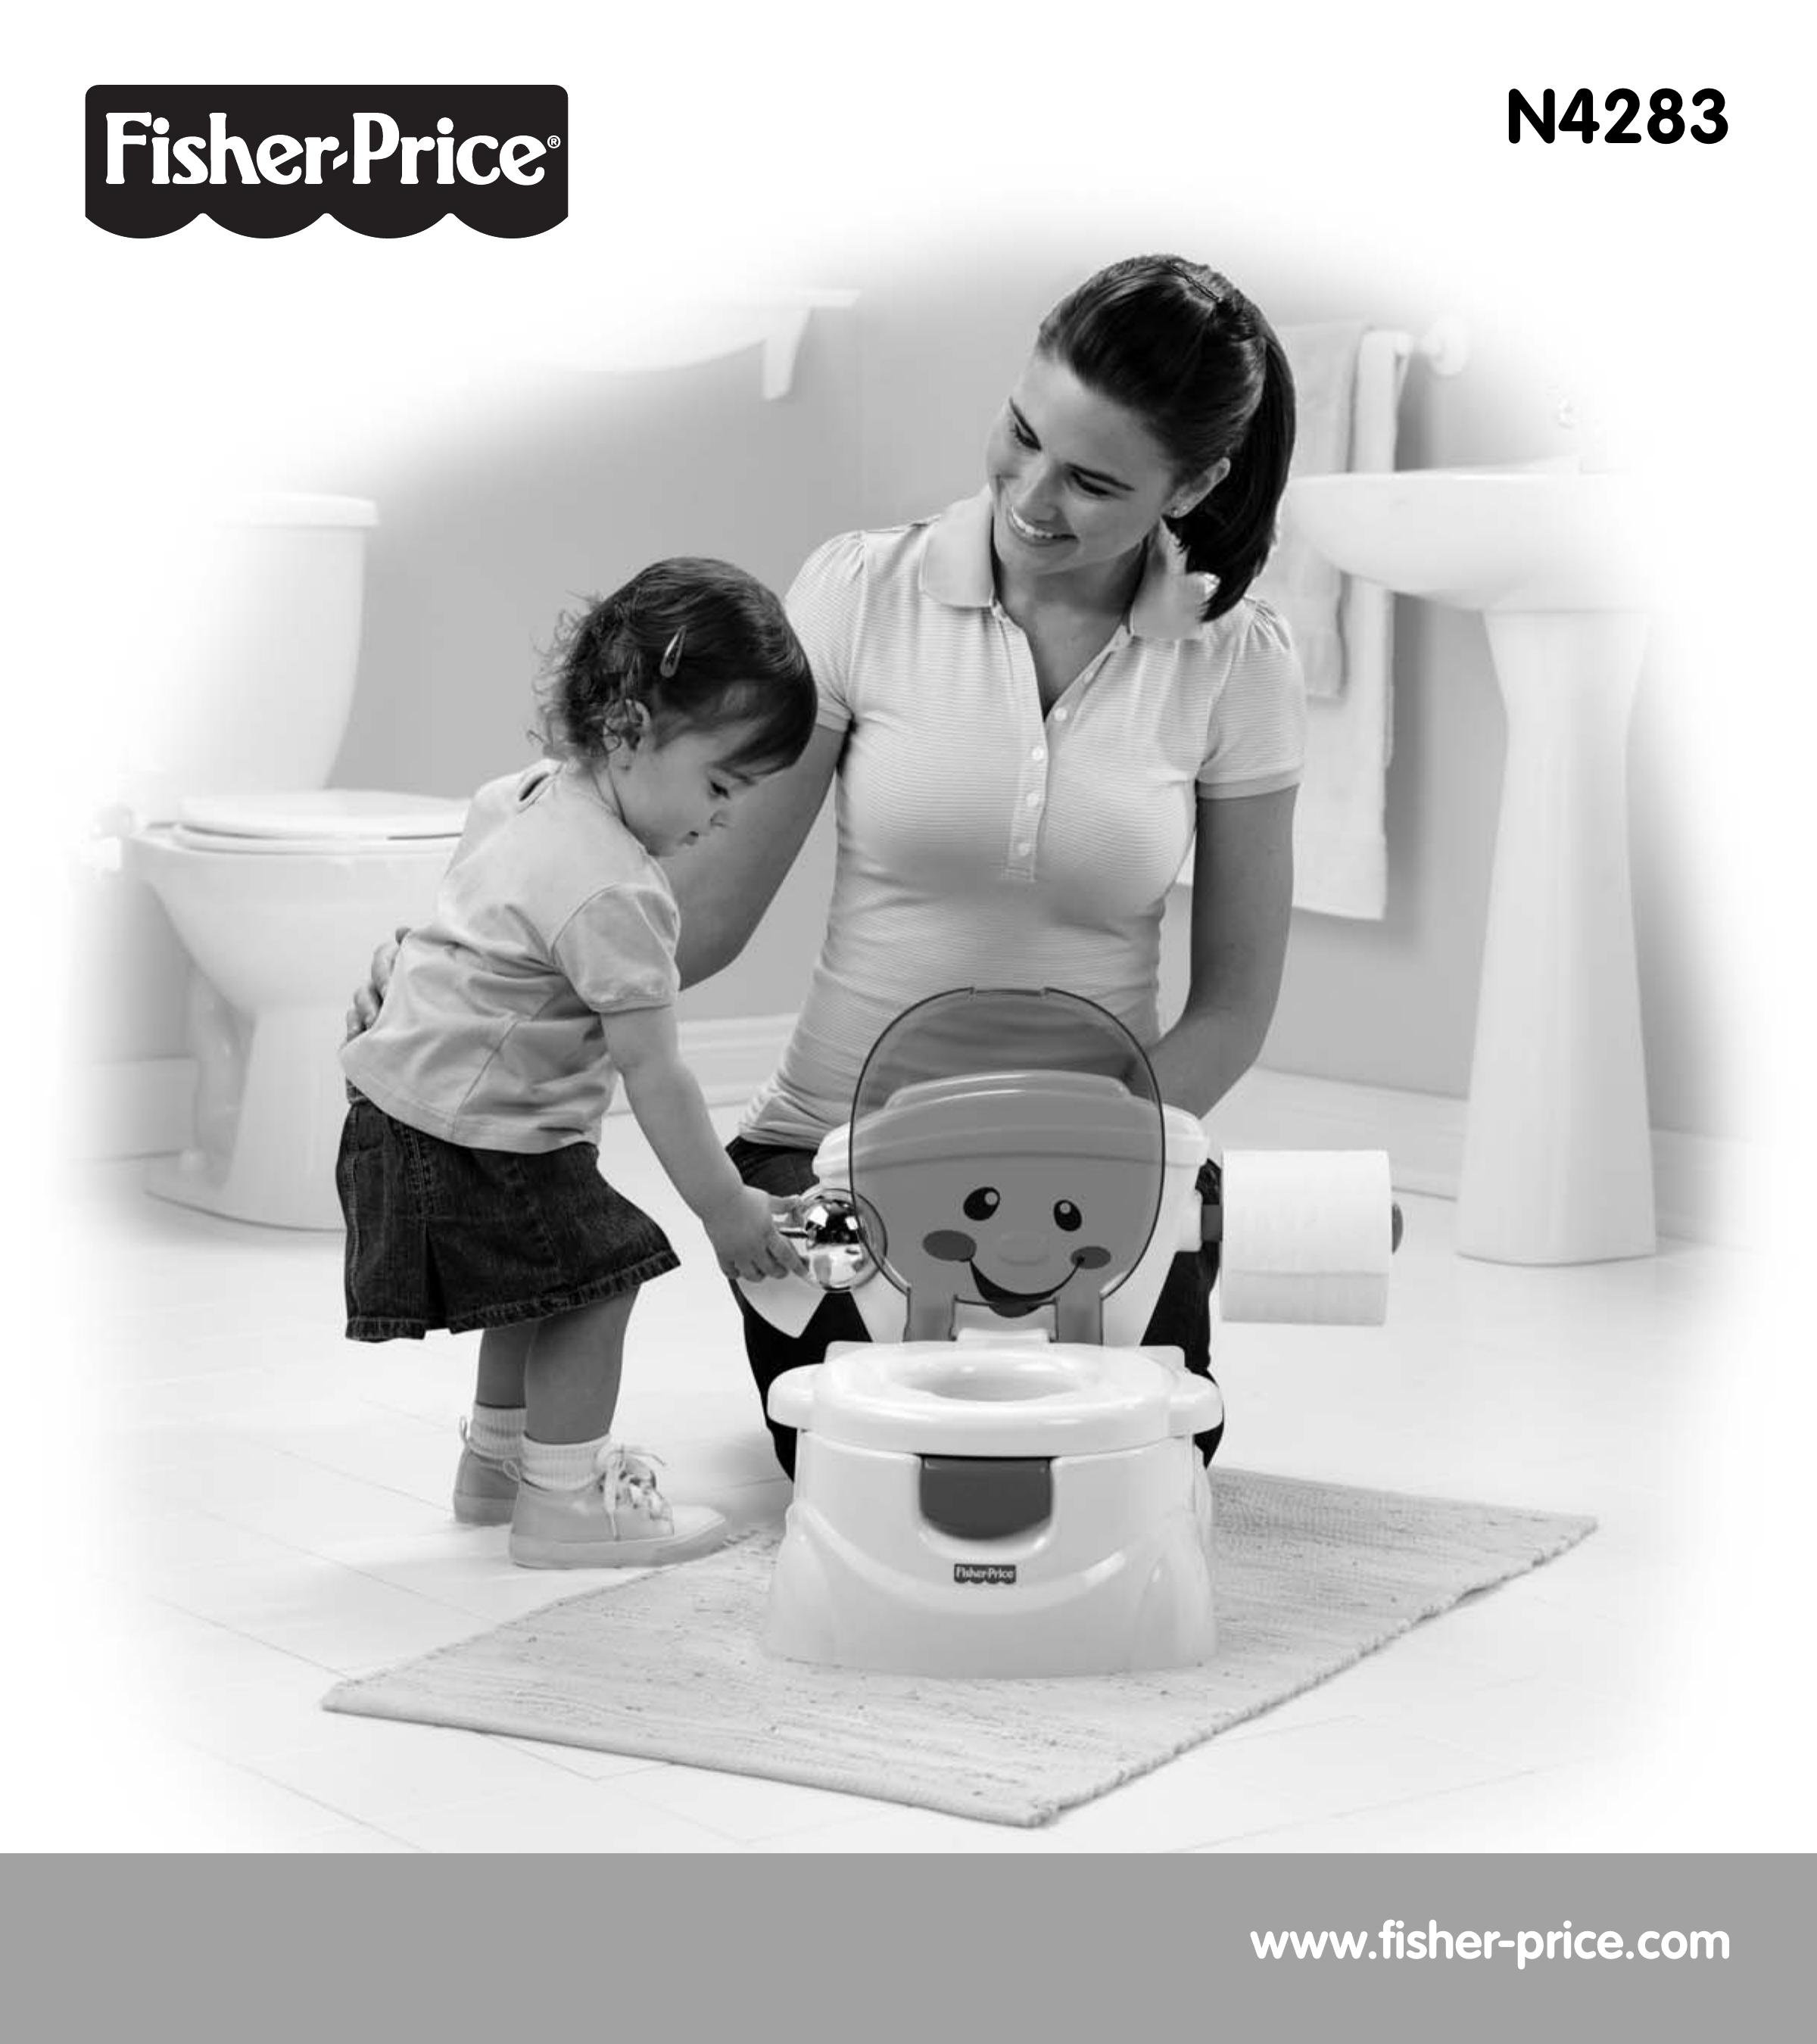 Fisher-Price N4283 Bathroom Aids User Manual